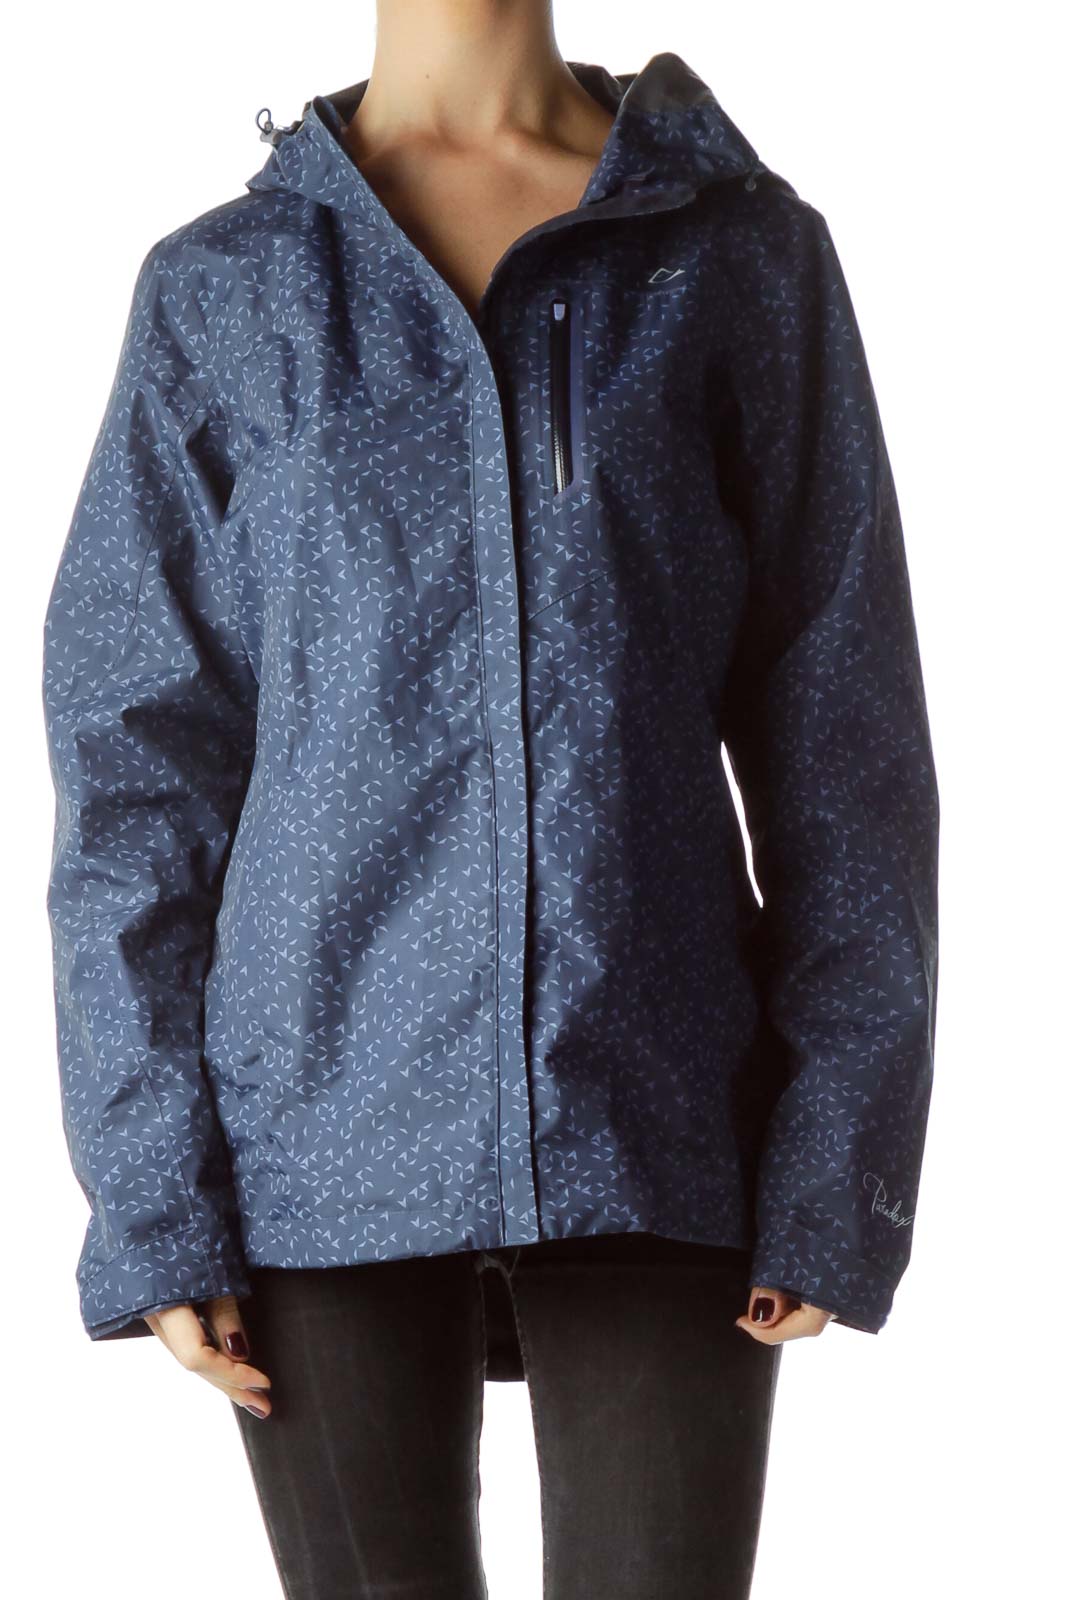 Blue Geometric Print Hooded Rain Jacket Front